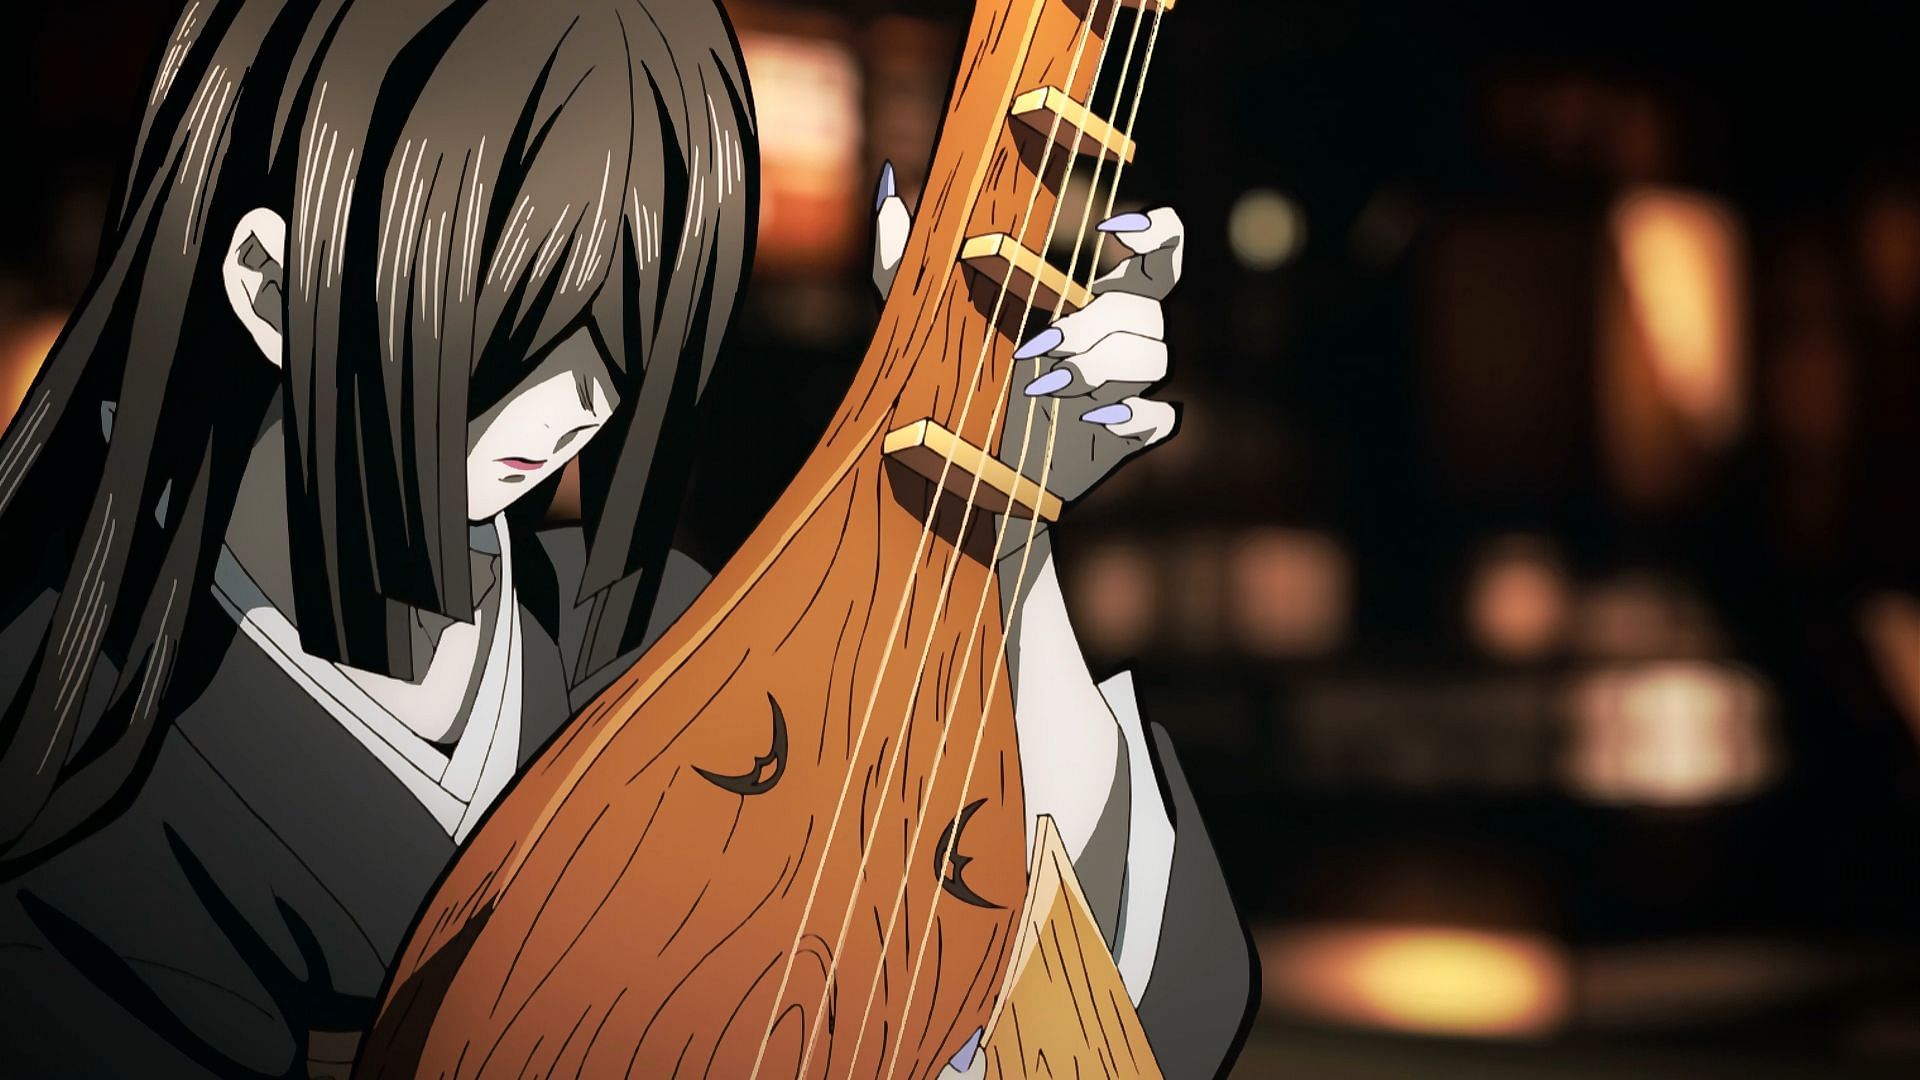 Nakime as seen in the anime (Image via Studio Ufotable)